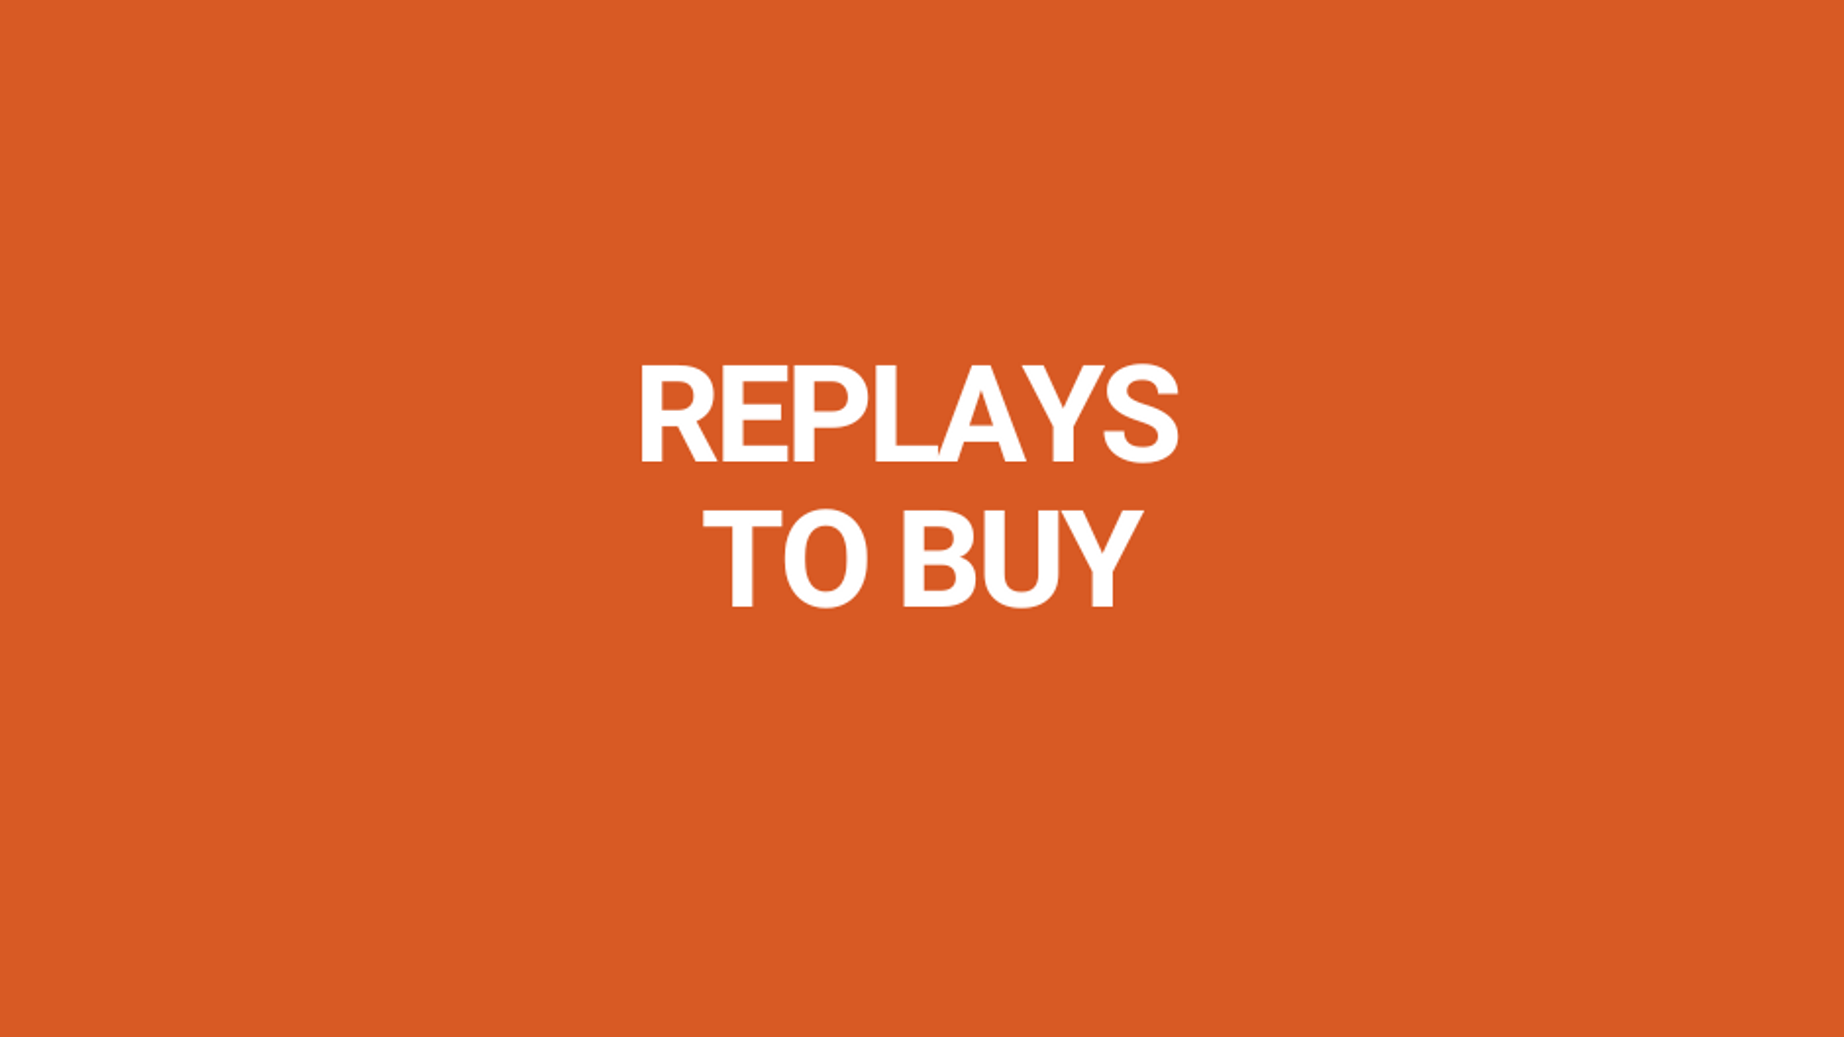 Replays to buy